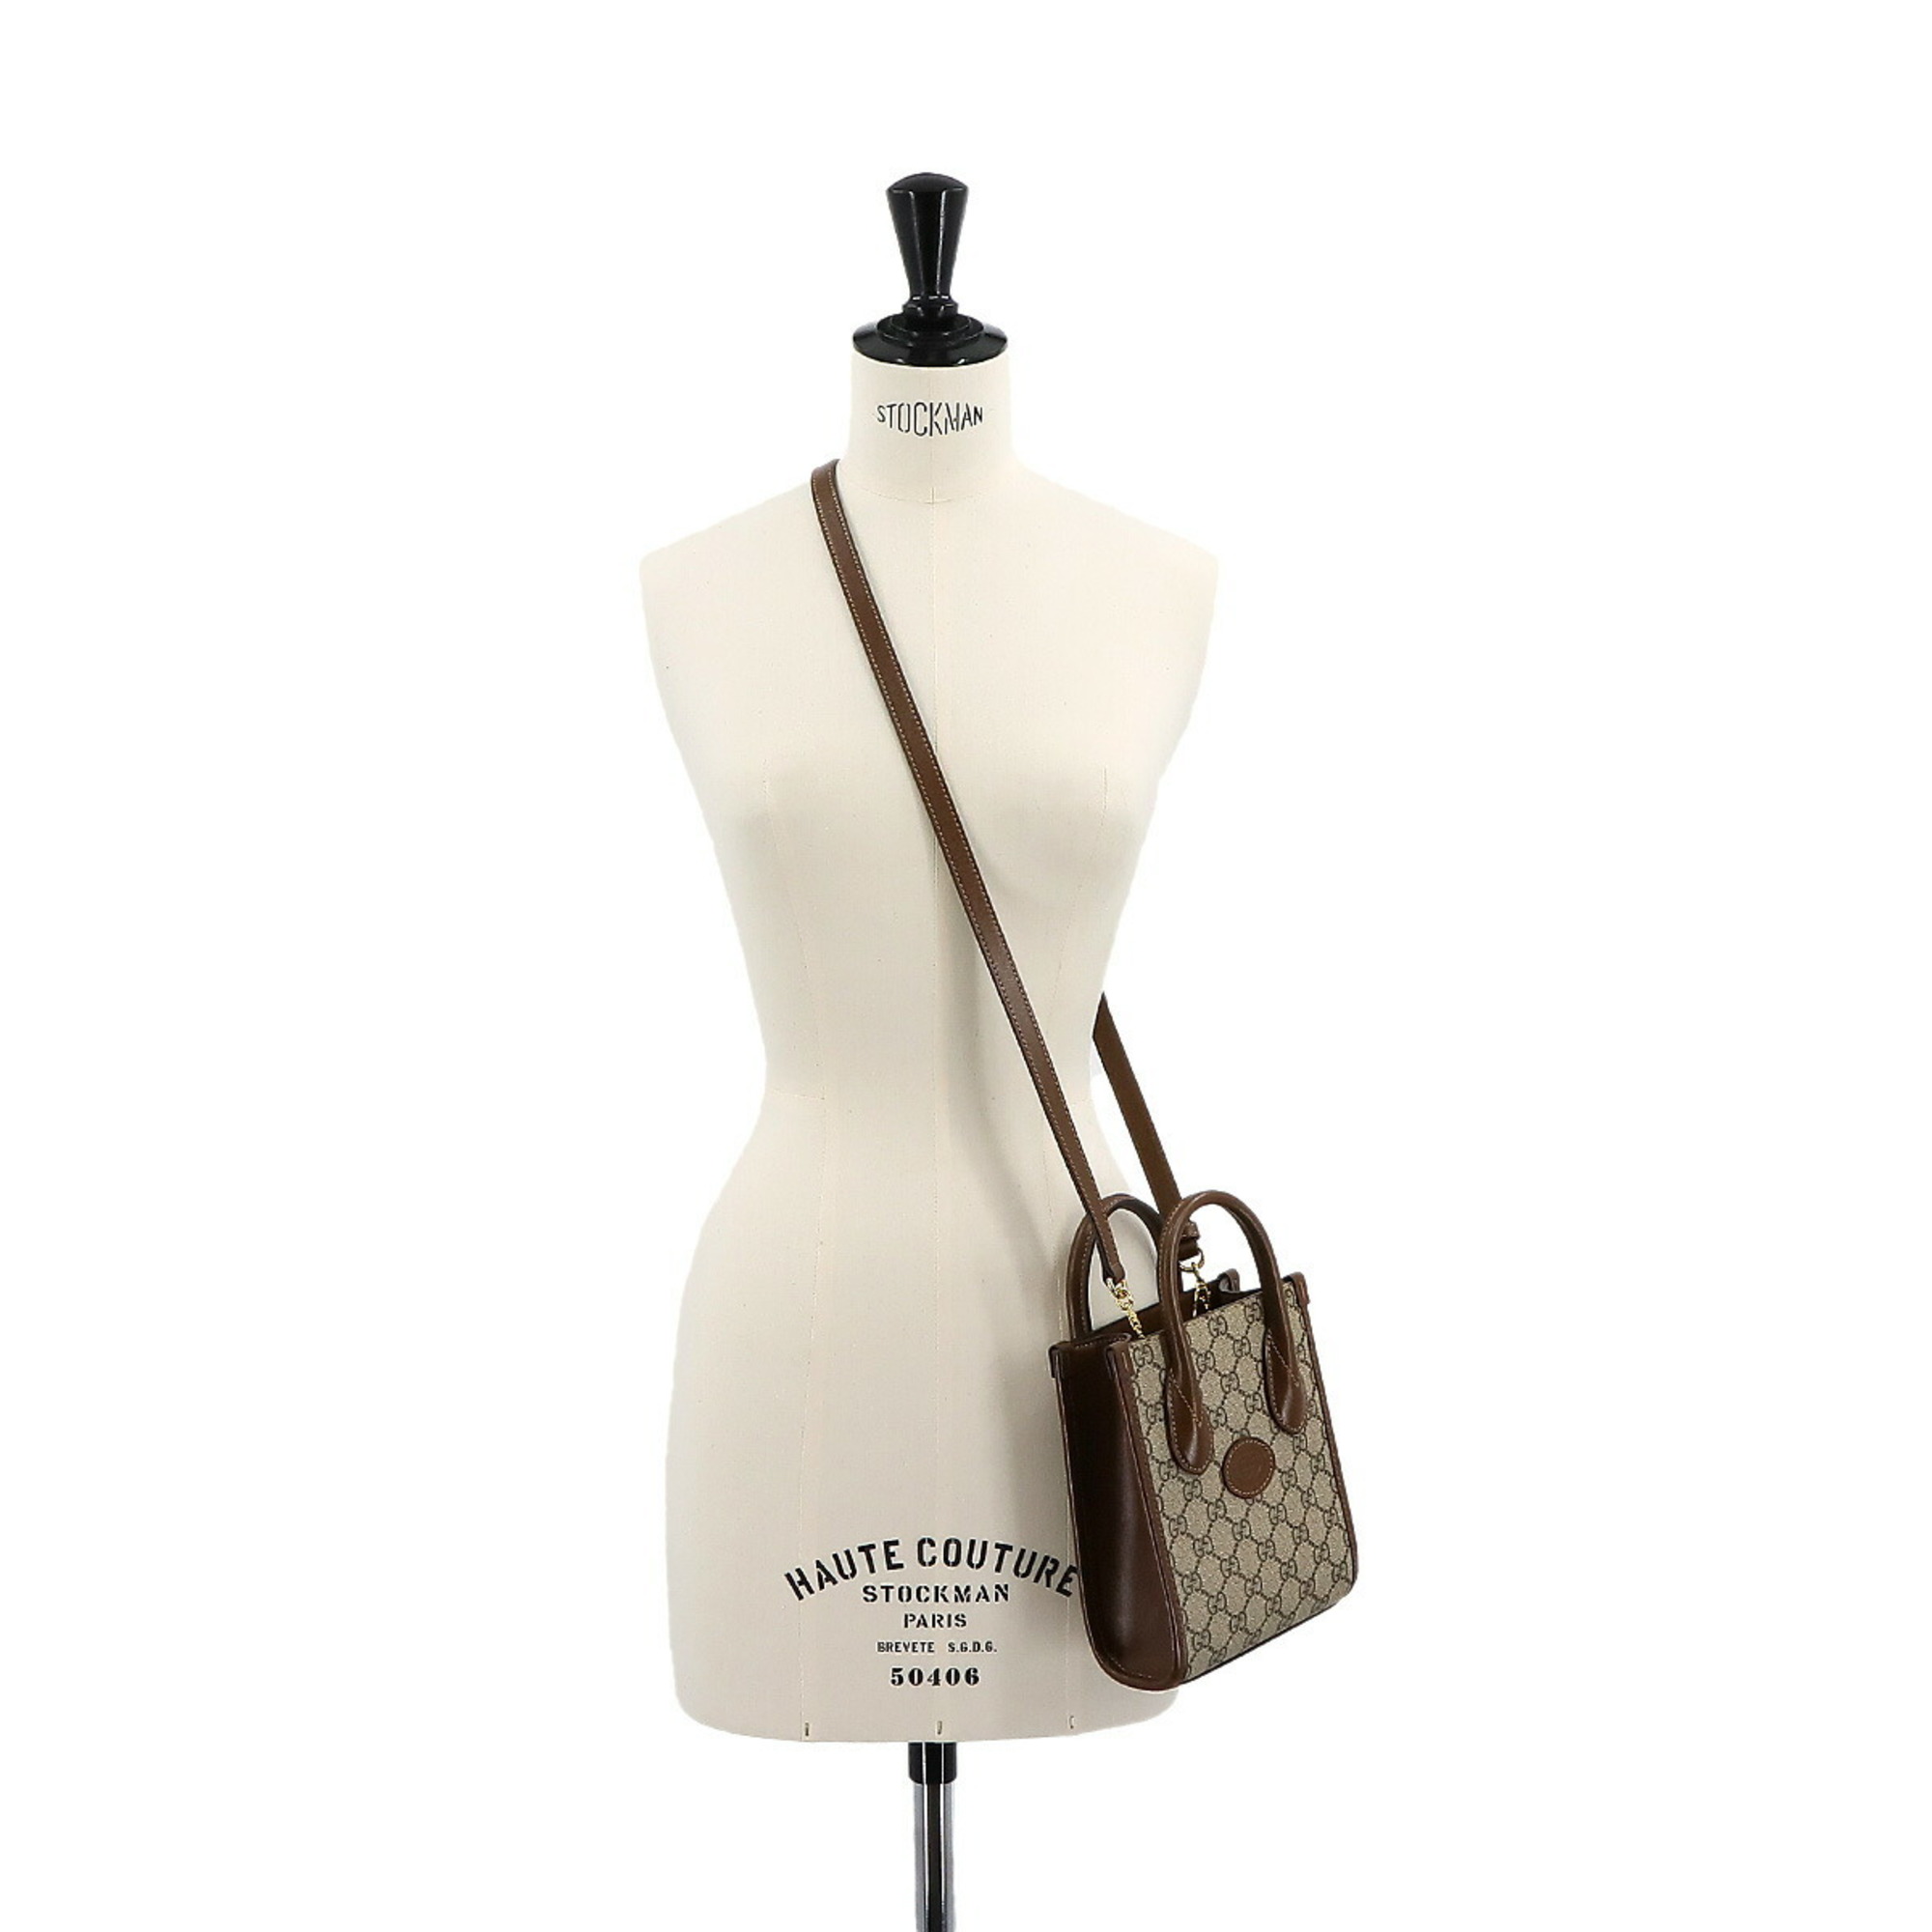 GUCCI Interlocking G Tote Shoulder Bag GG Supreme Canvas Leather Beige Brown 671623 Mini